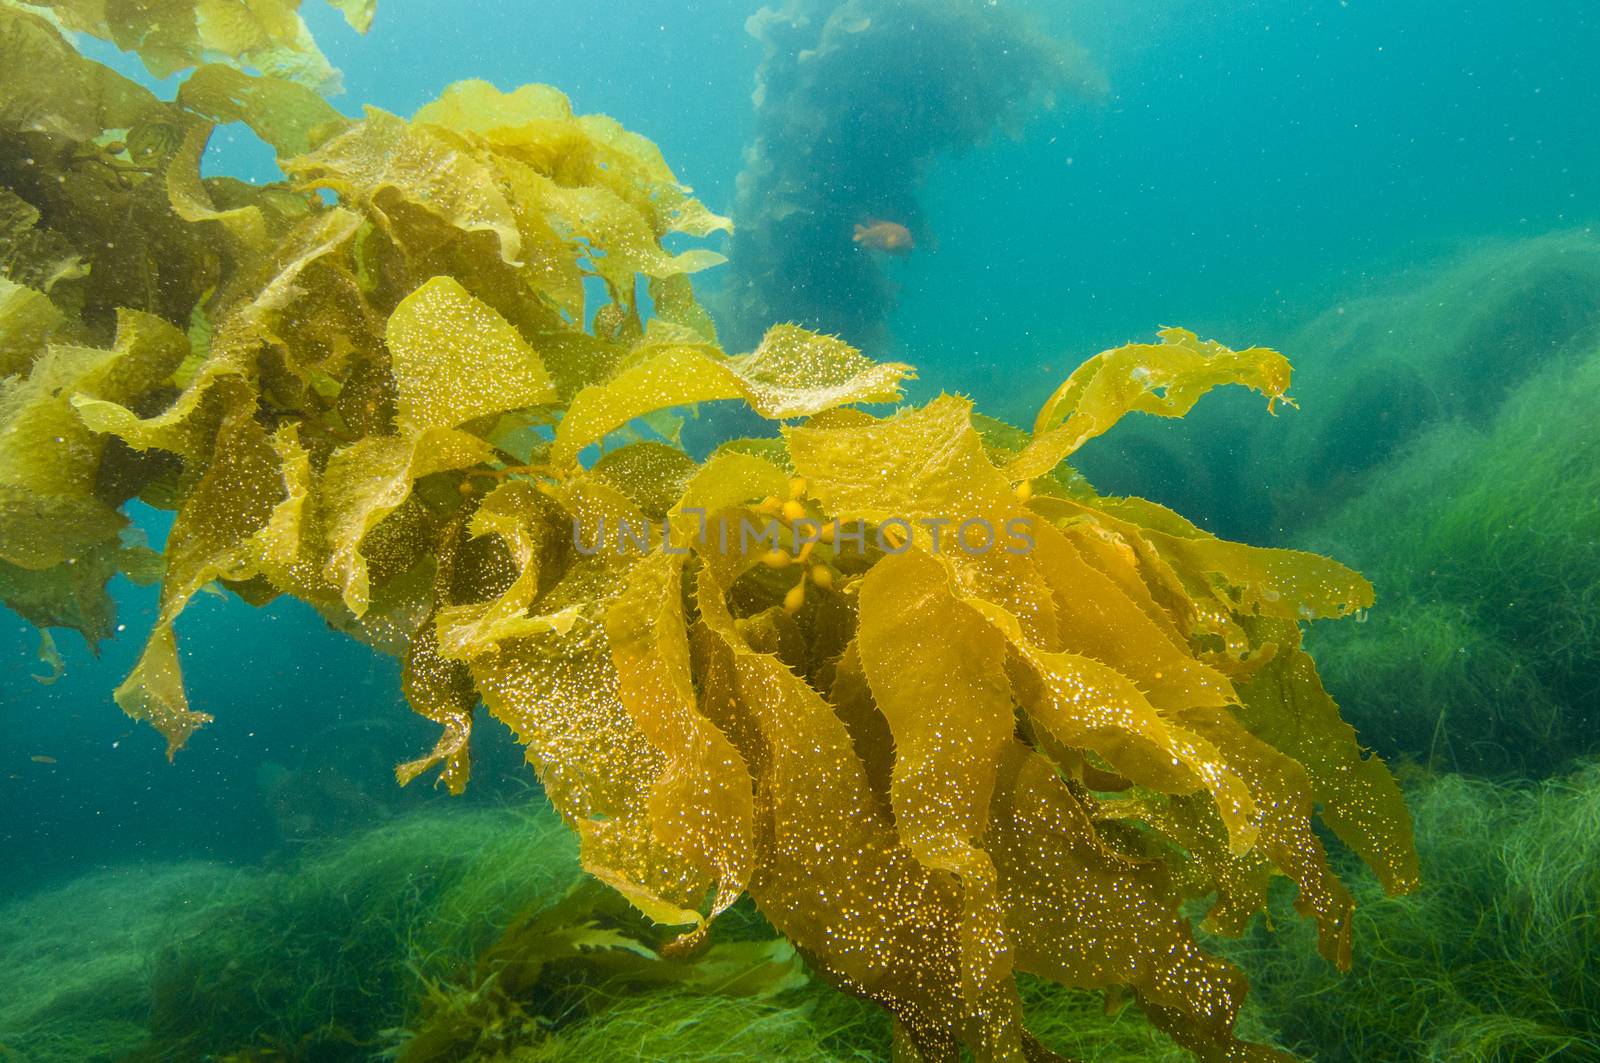 Giant Kelp Fronds off San Clemente island, CA by Njean